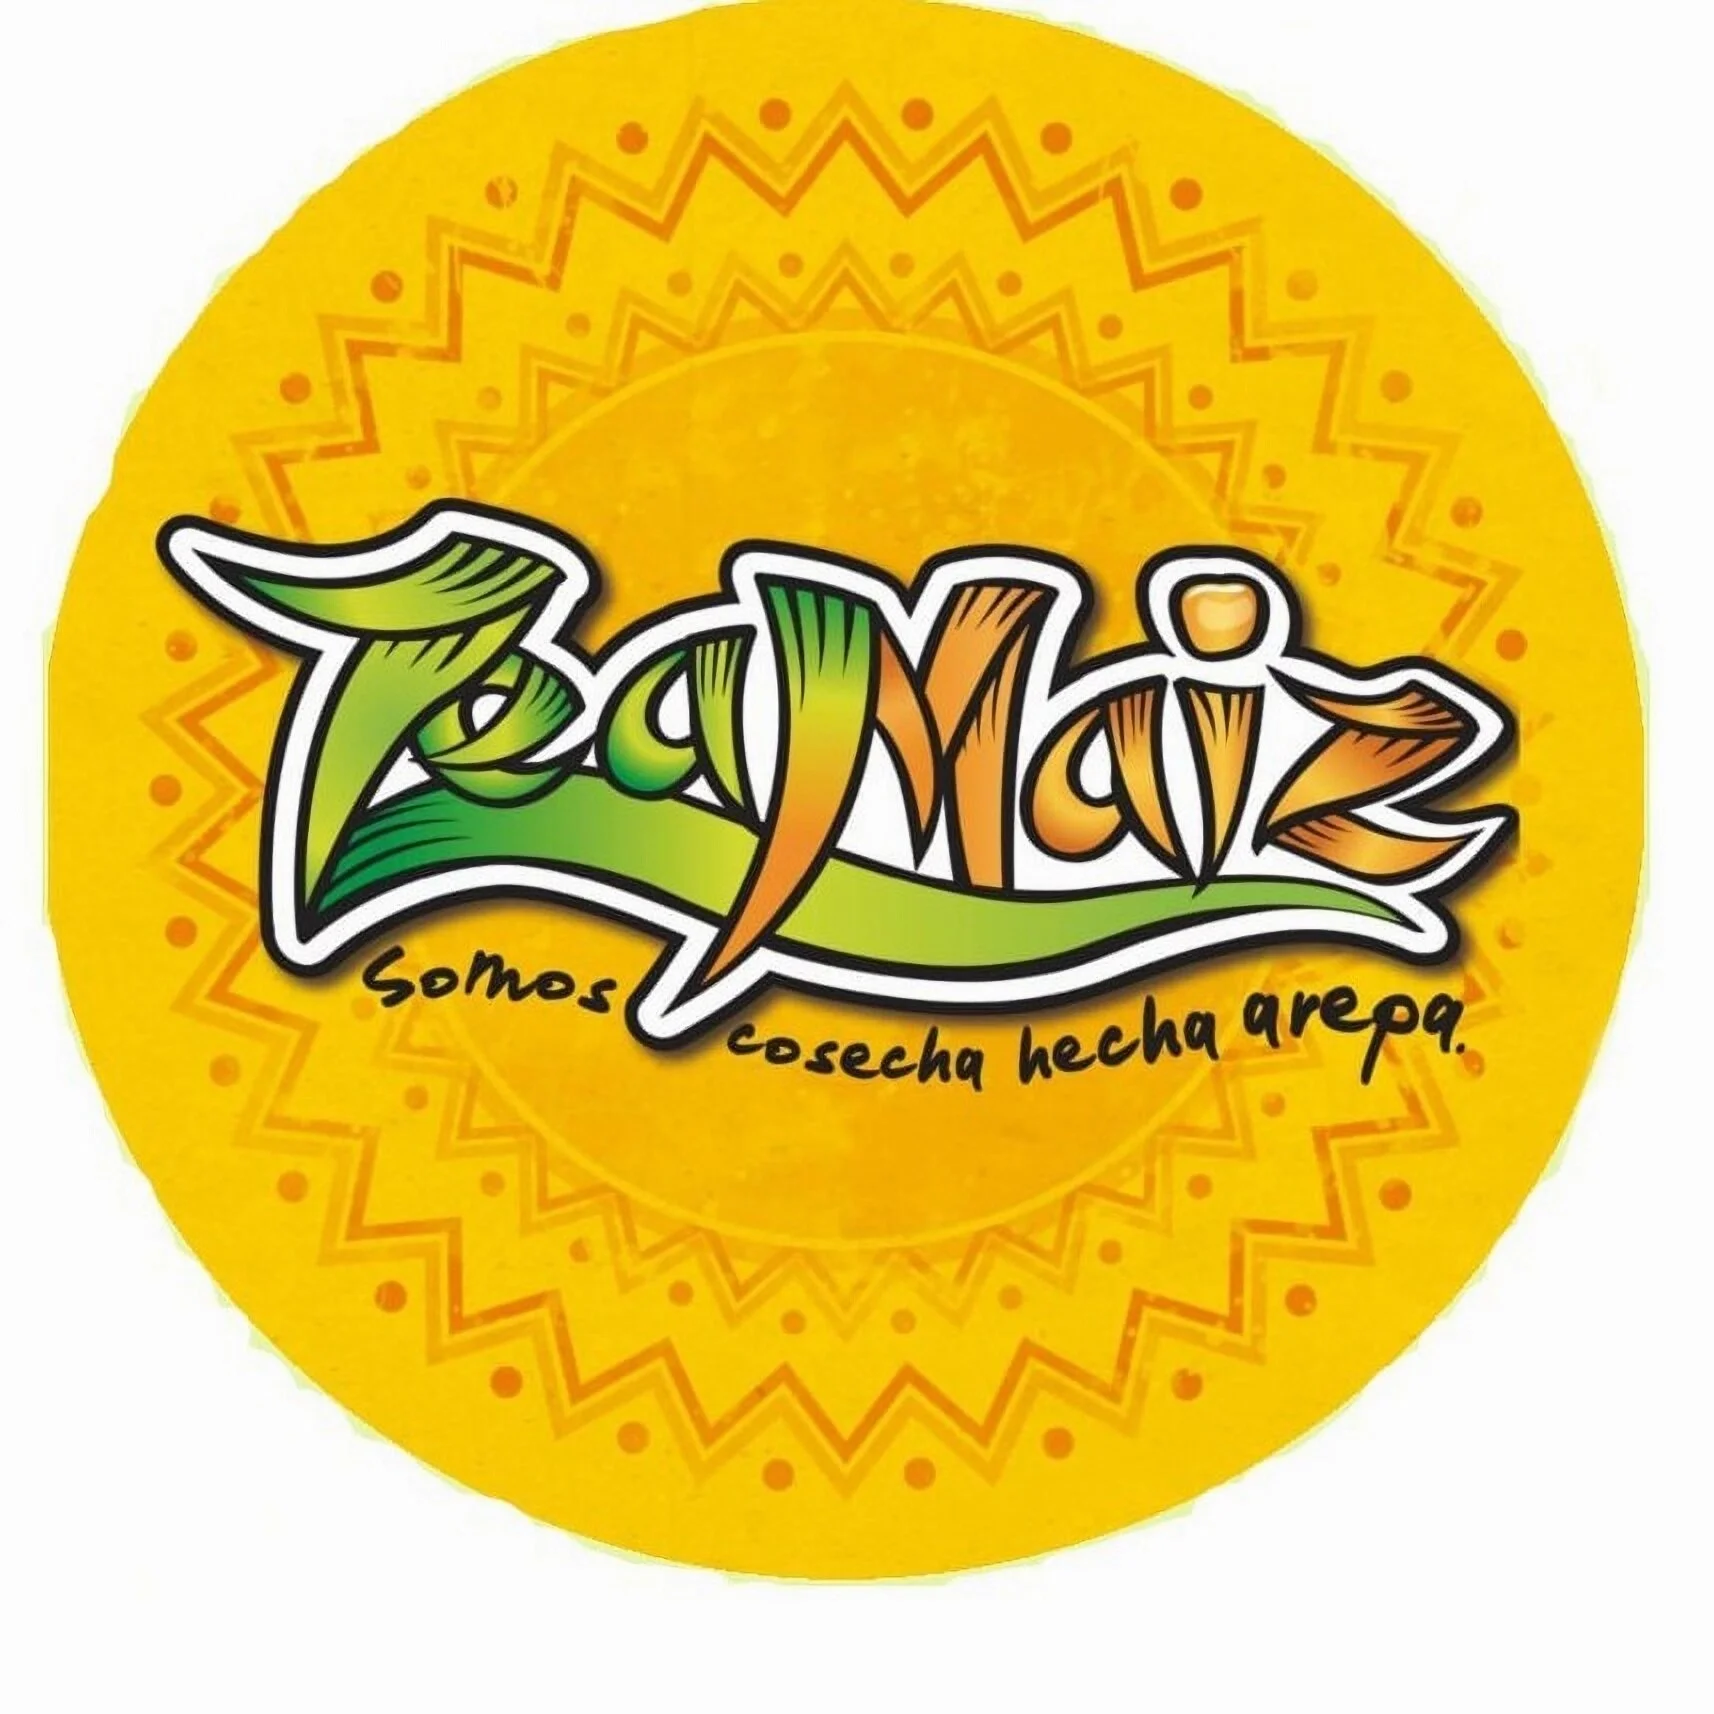 Restaurante-zea-maiz-24191